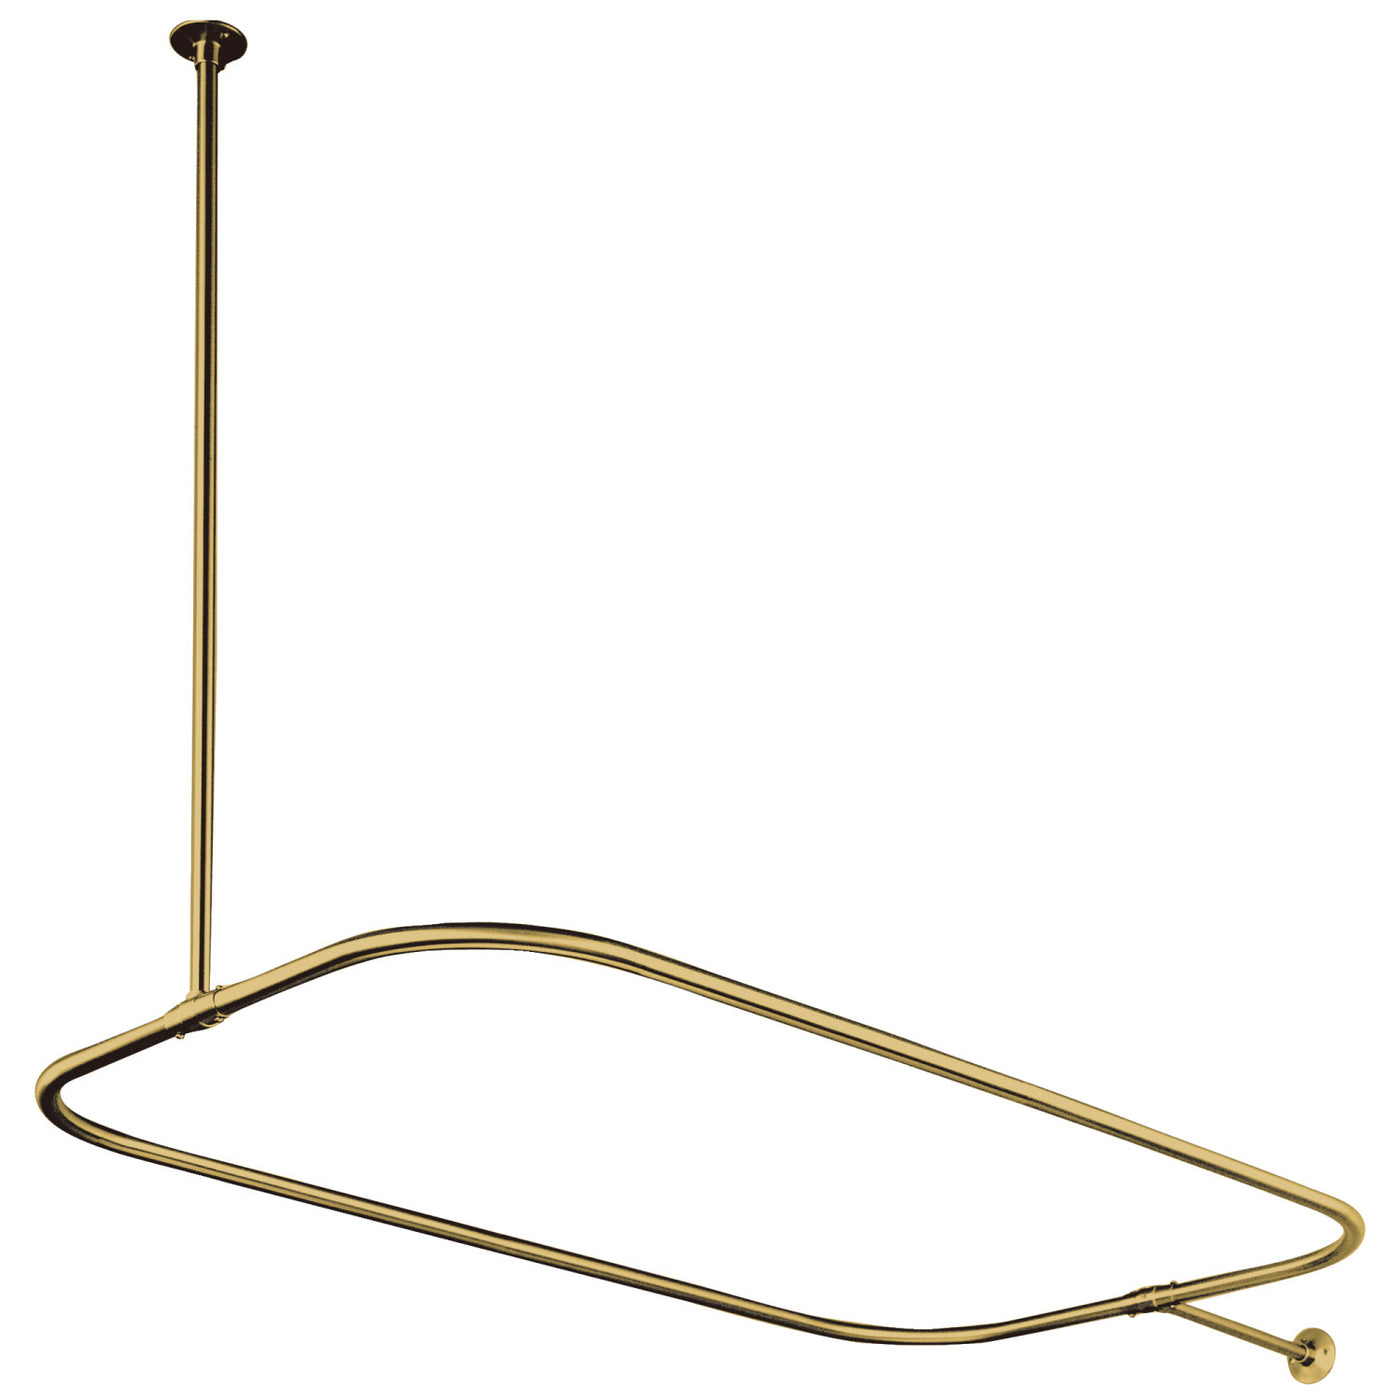 Elements of Design ED3152 Rectangular Shower Curtain Rod, Polished Brass